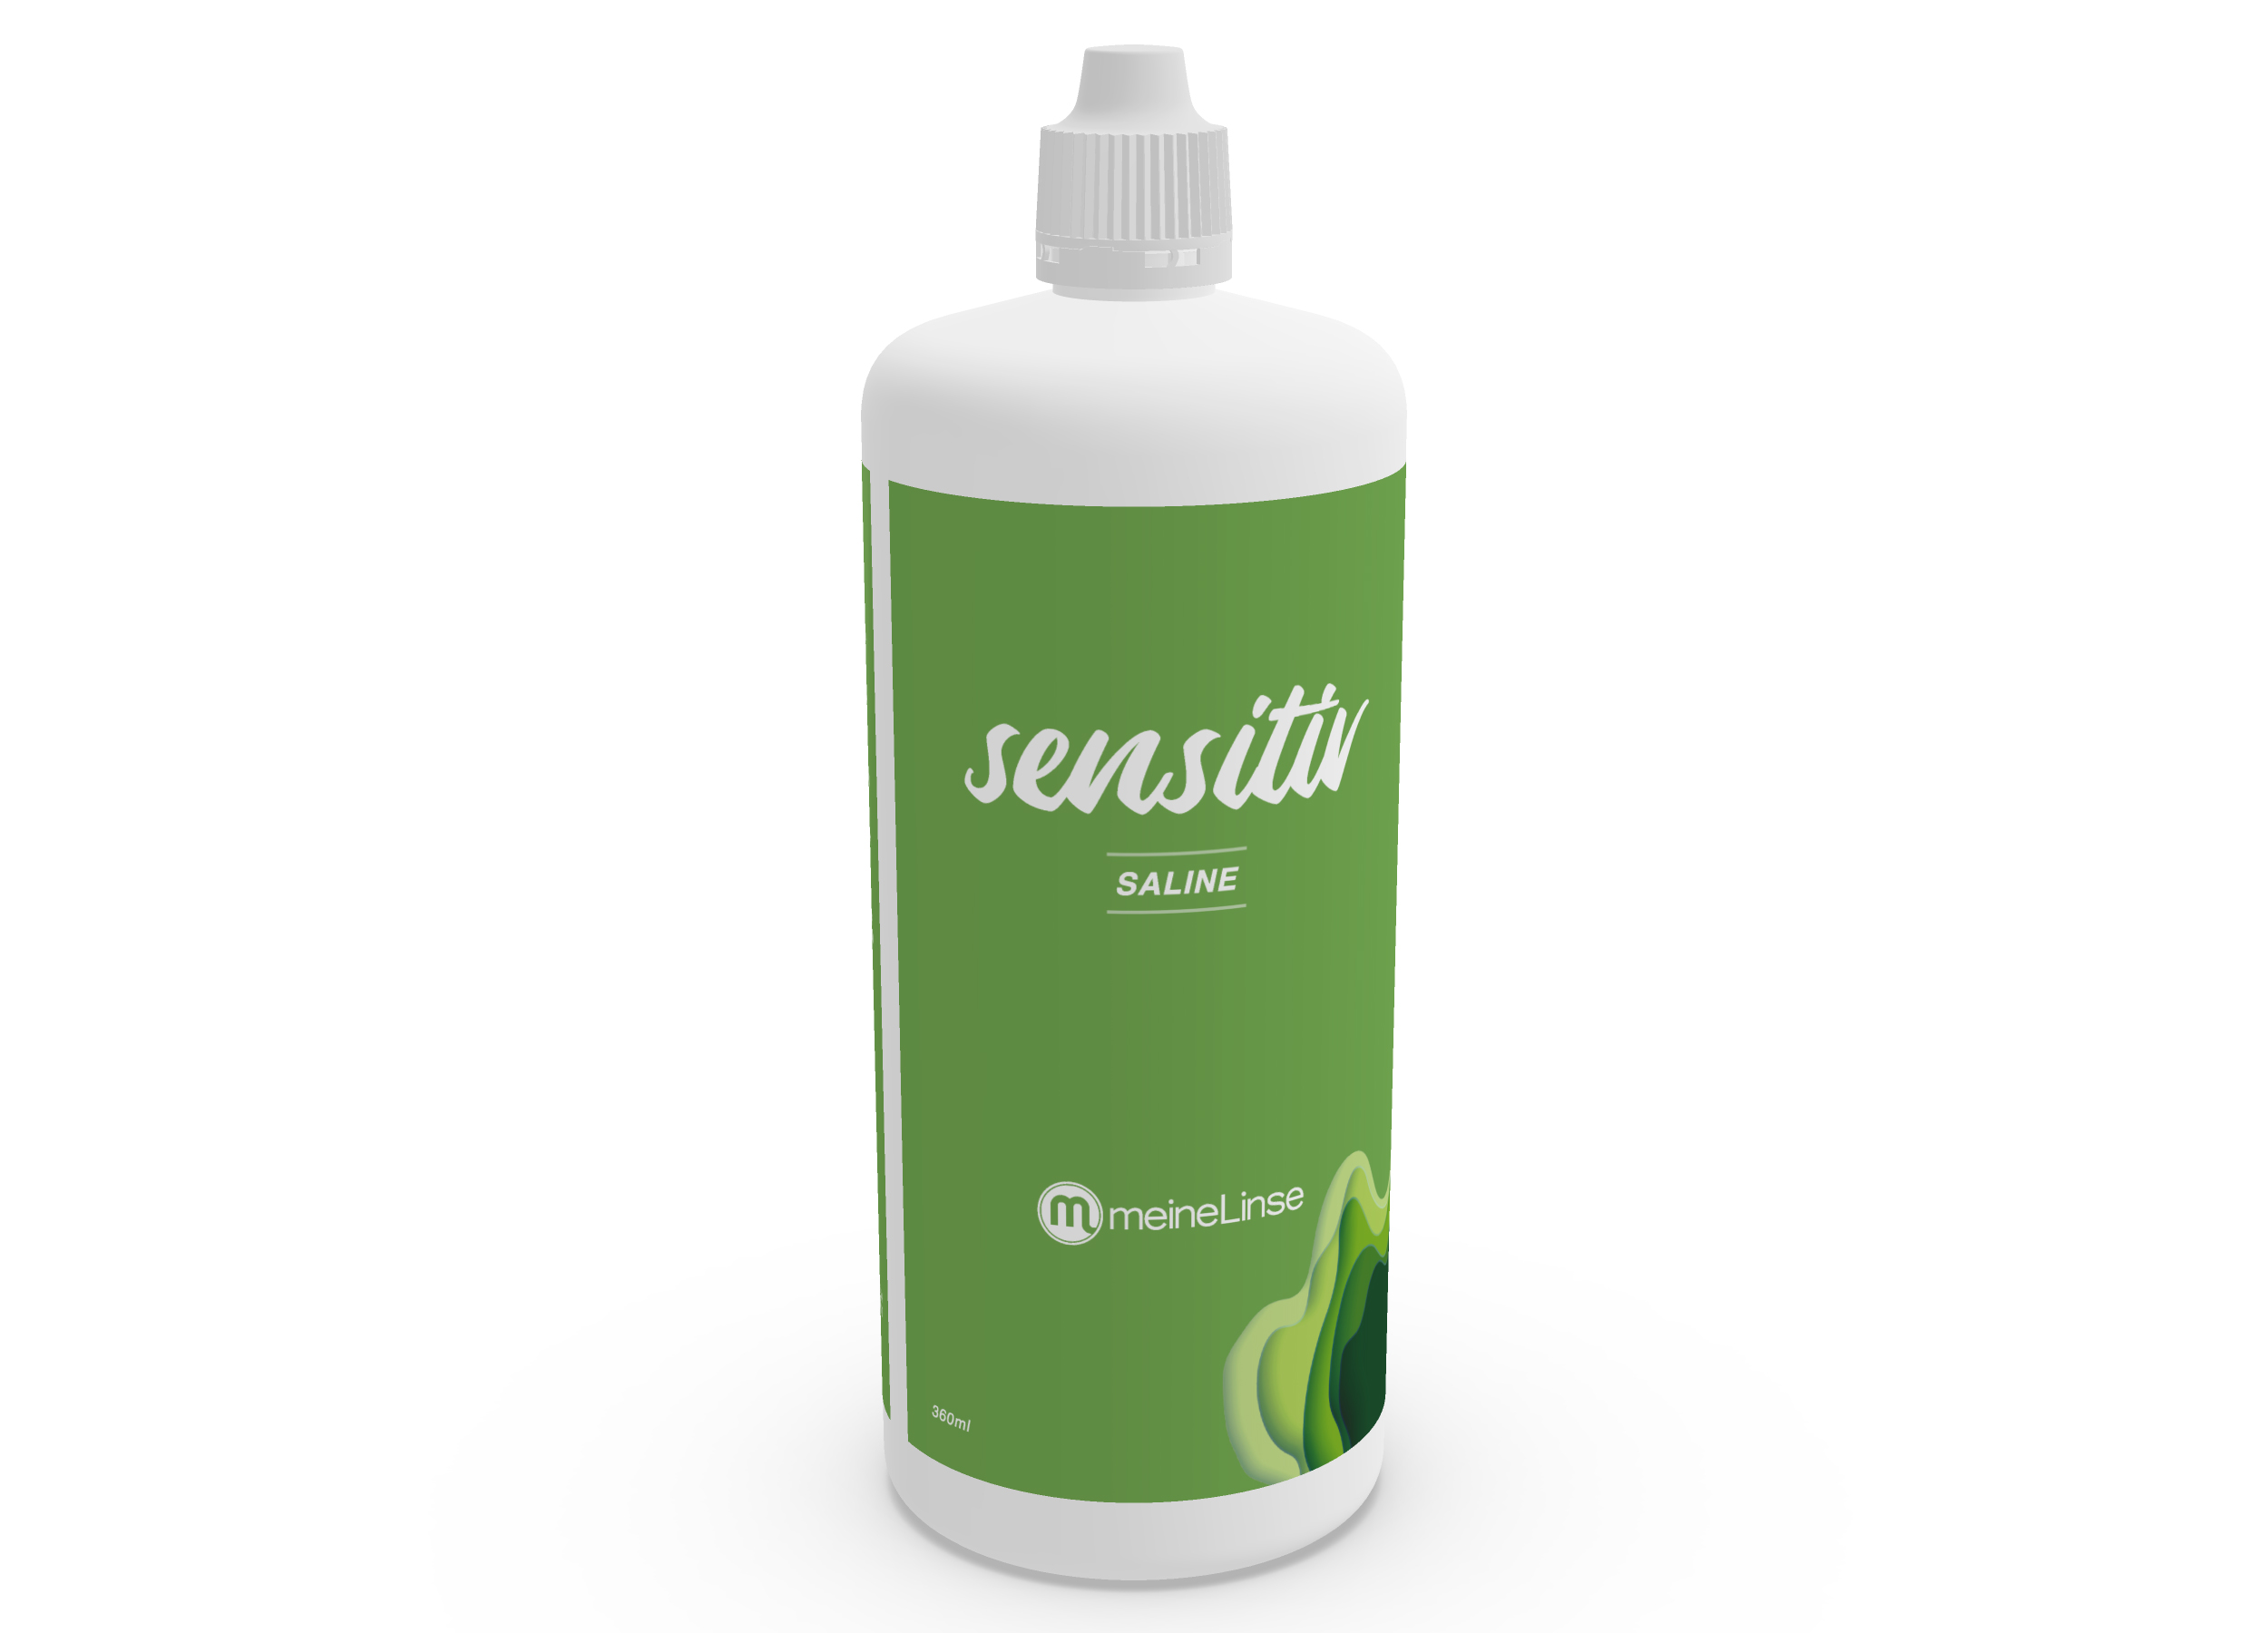 Sensitiv Saline Kochsalzlösung 360ml – meineLinse (ehemals Oculsoft)